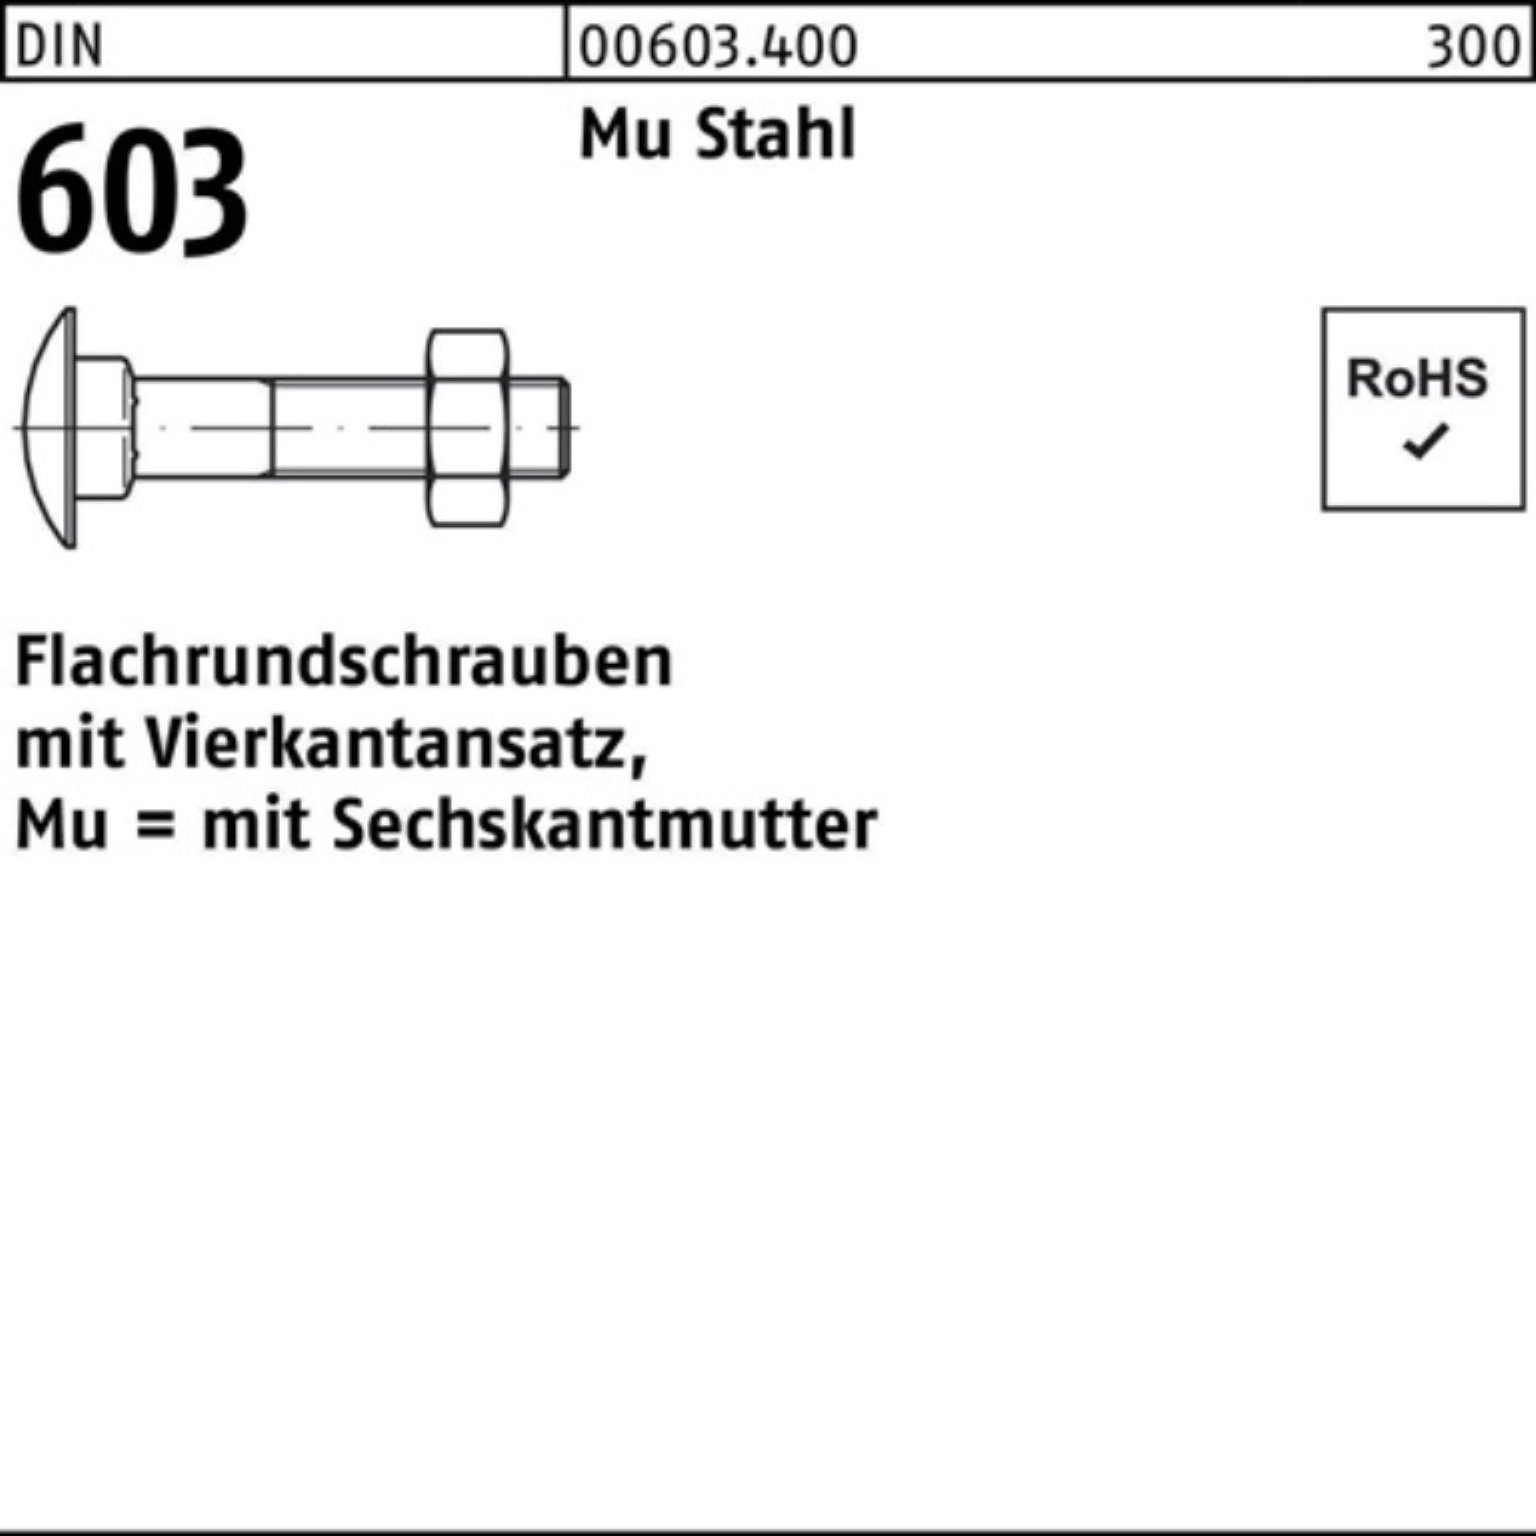 Pack M16x65 Vierkantansatz/6-ktmutter Schraube 100er DIN Flachrundschraube Reyher 603